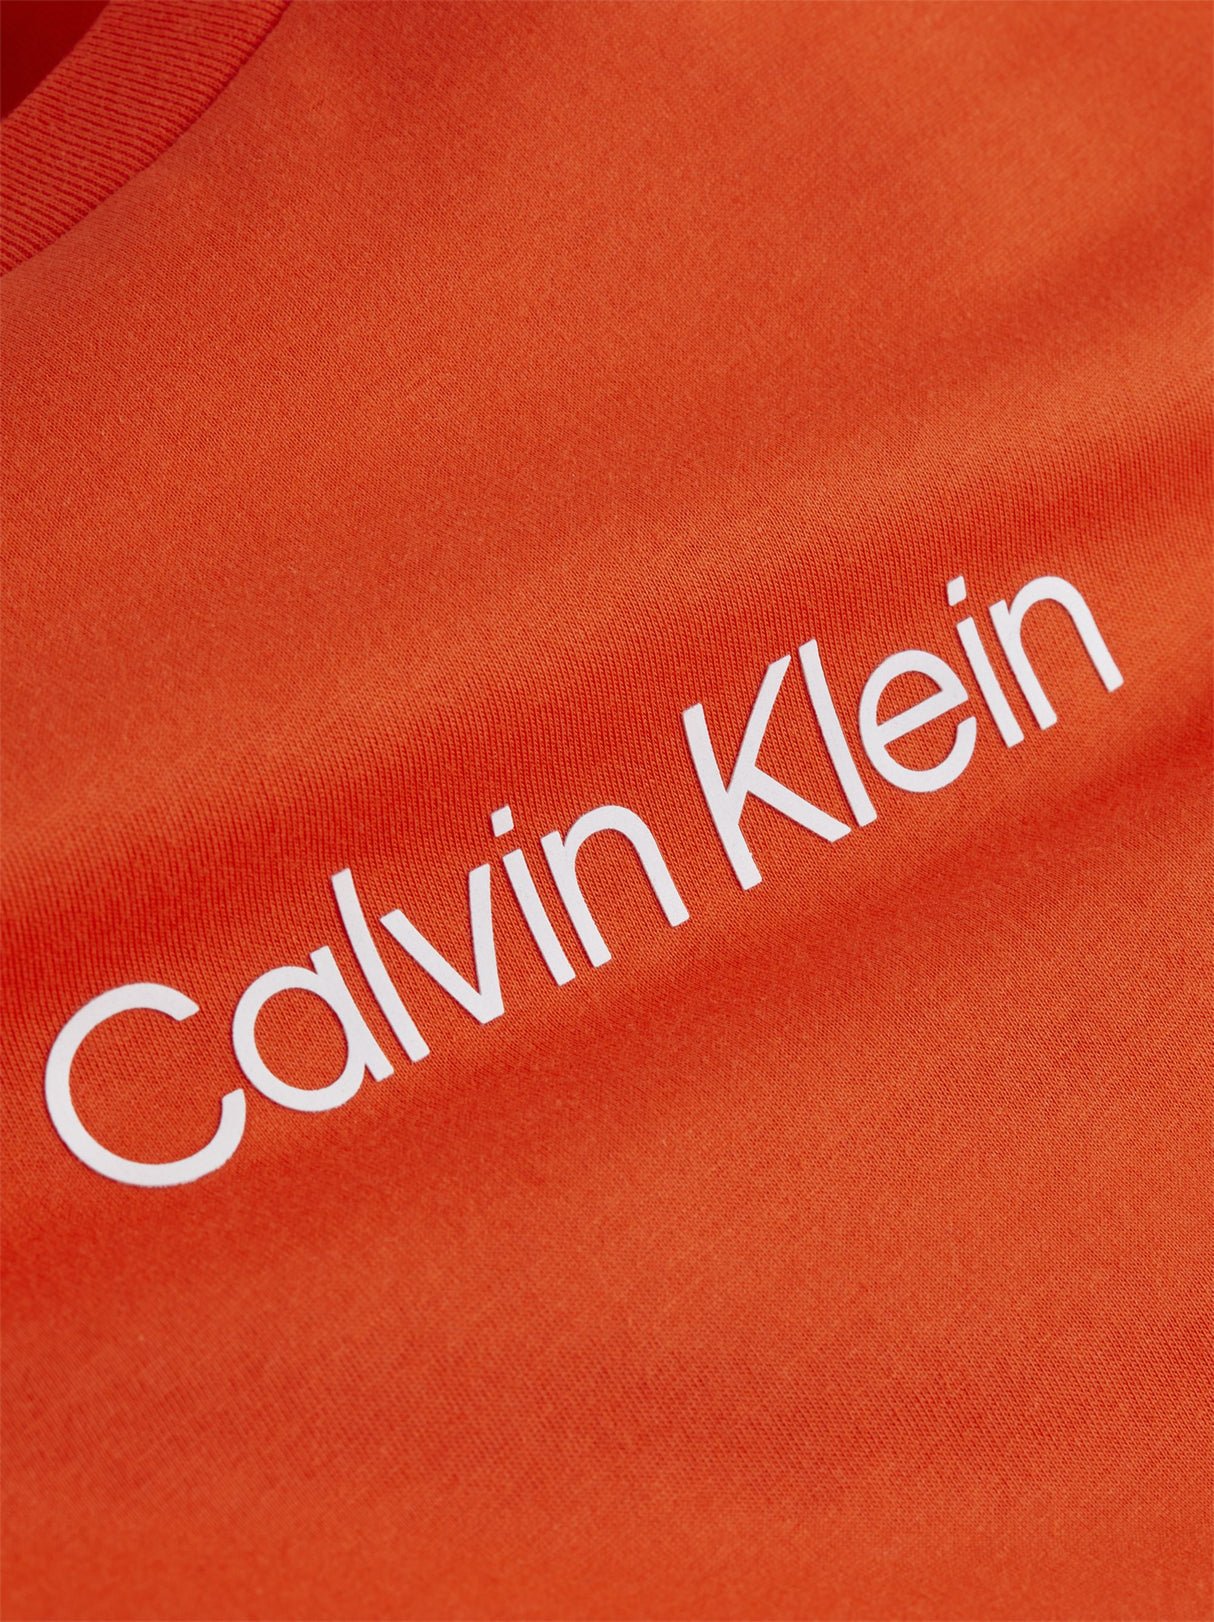 Calvin Klein Hero Logo Orange Hoodie Orange